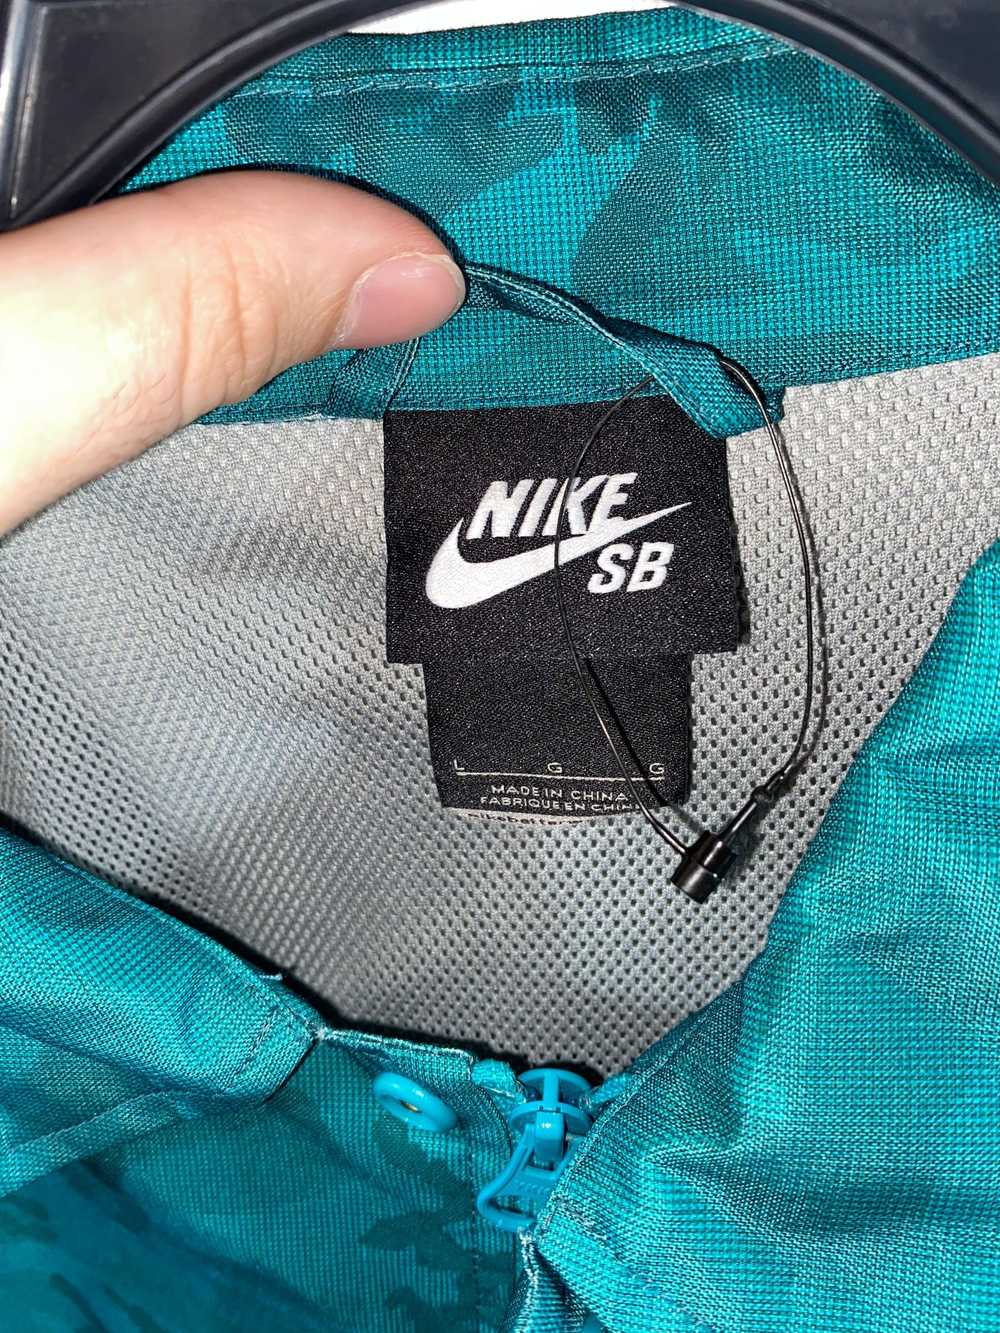 Nike Nike SB Light Green Camo Jacket Size L - image 3